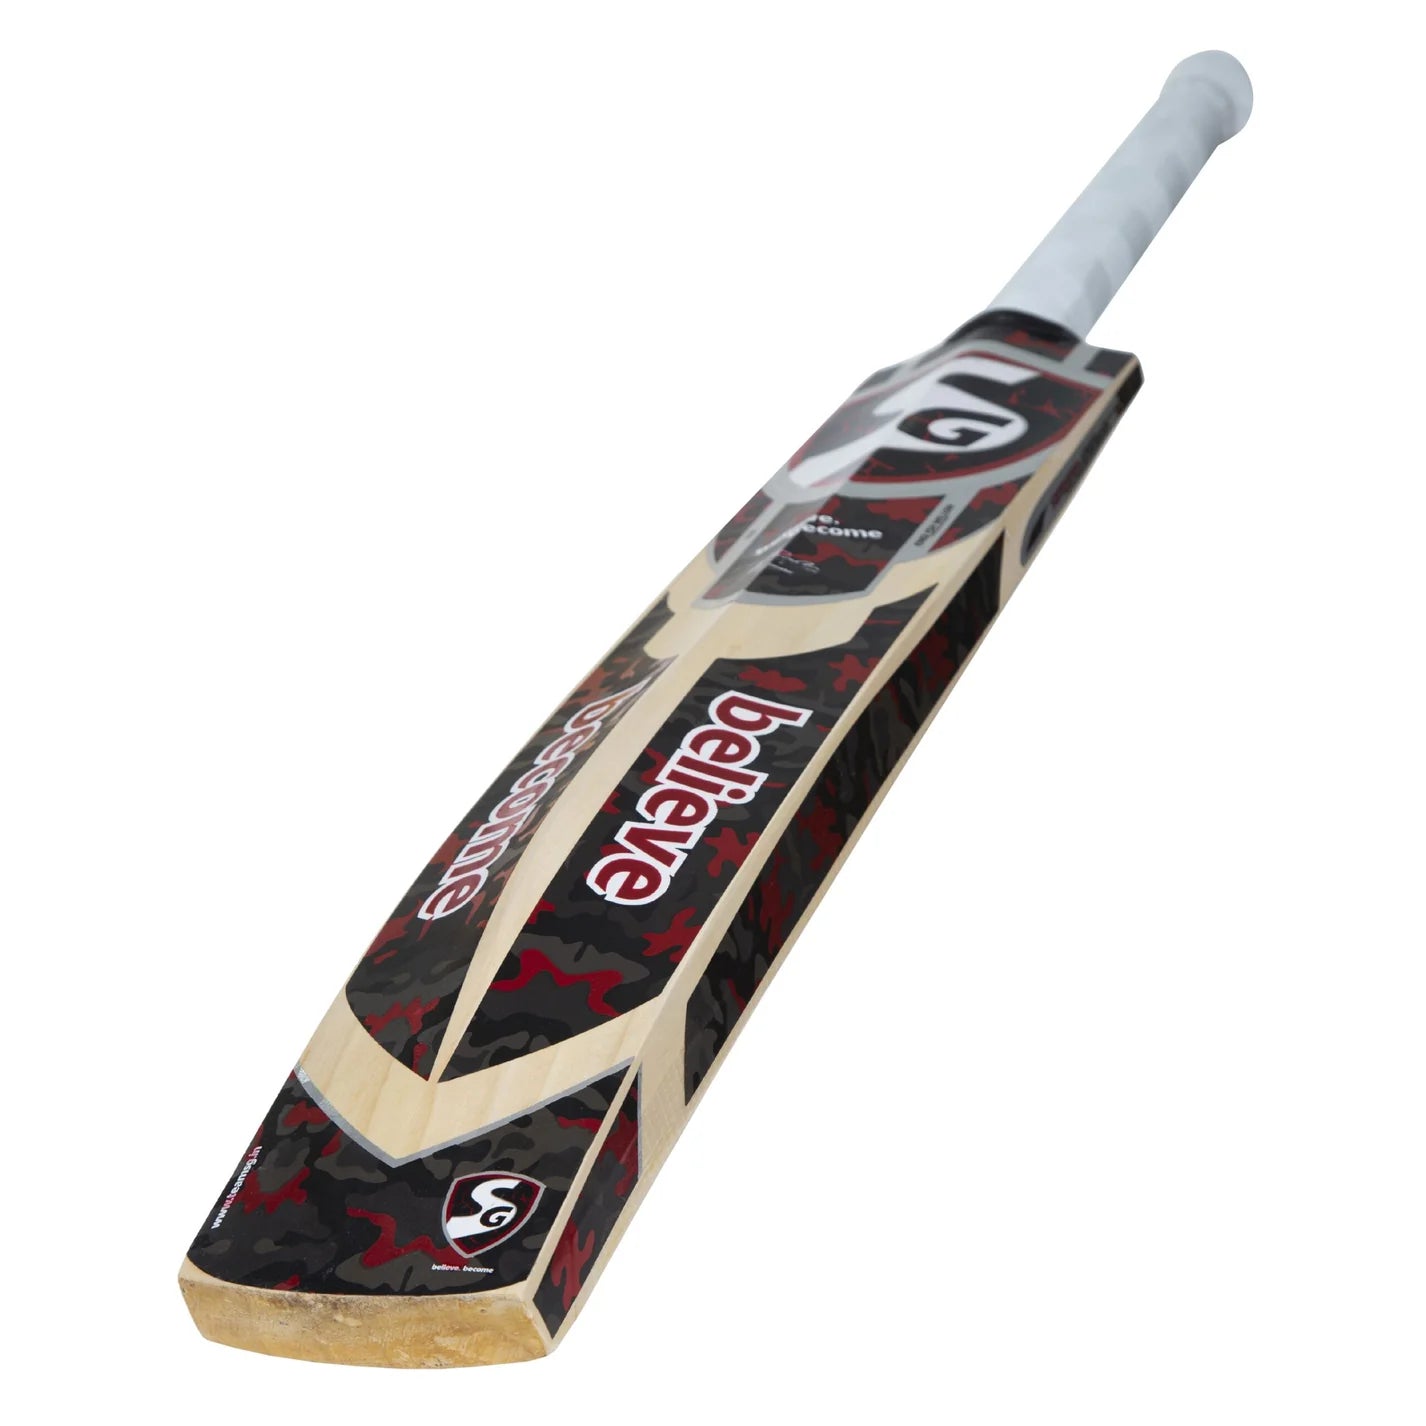 SG Sierra 150 Traditionally Shaped English Willow Cricket Bat